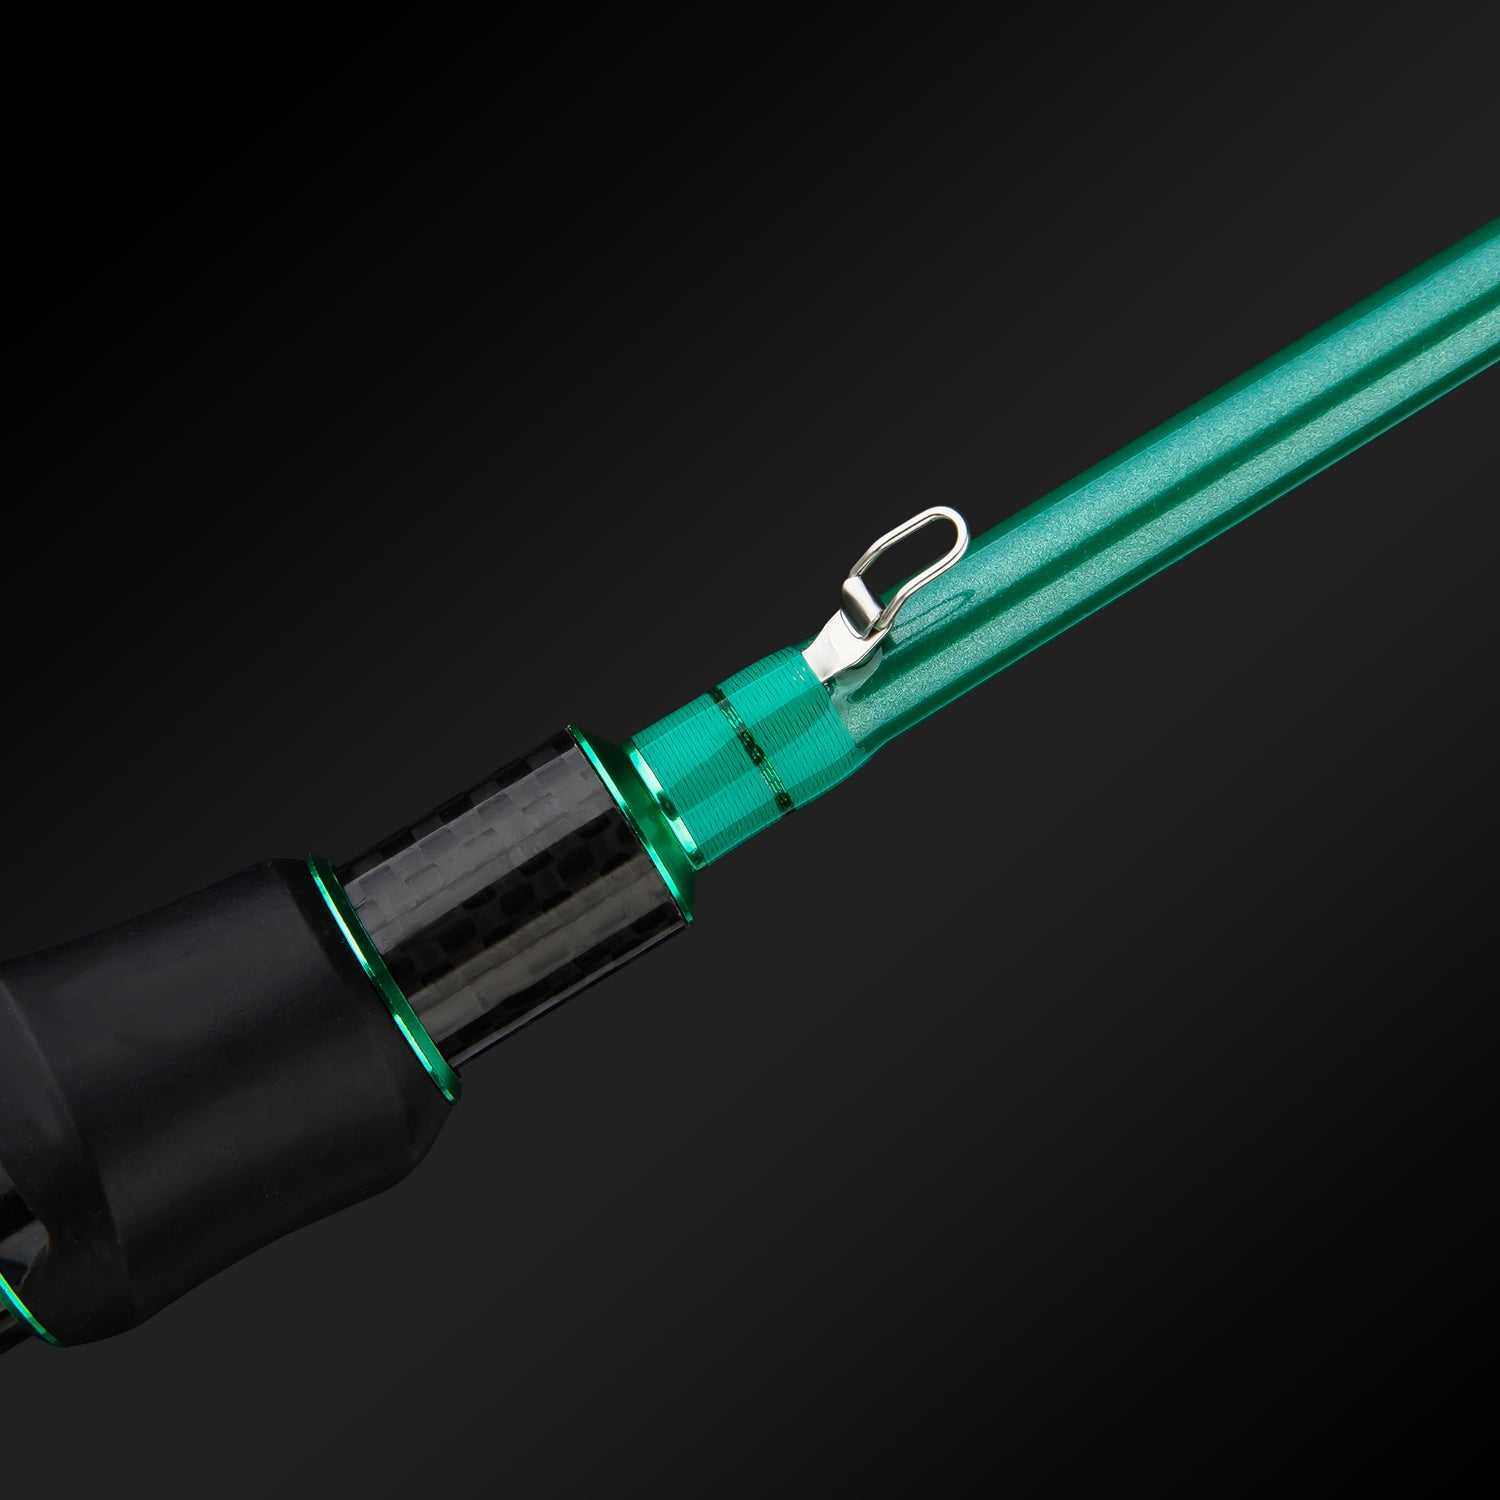 Skmially Rod Carbon Tip Ultralight fishing rod 6' 2-6lbs